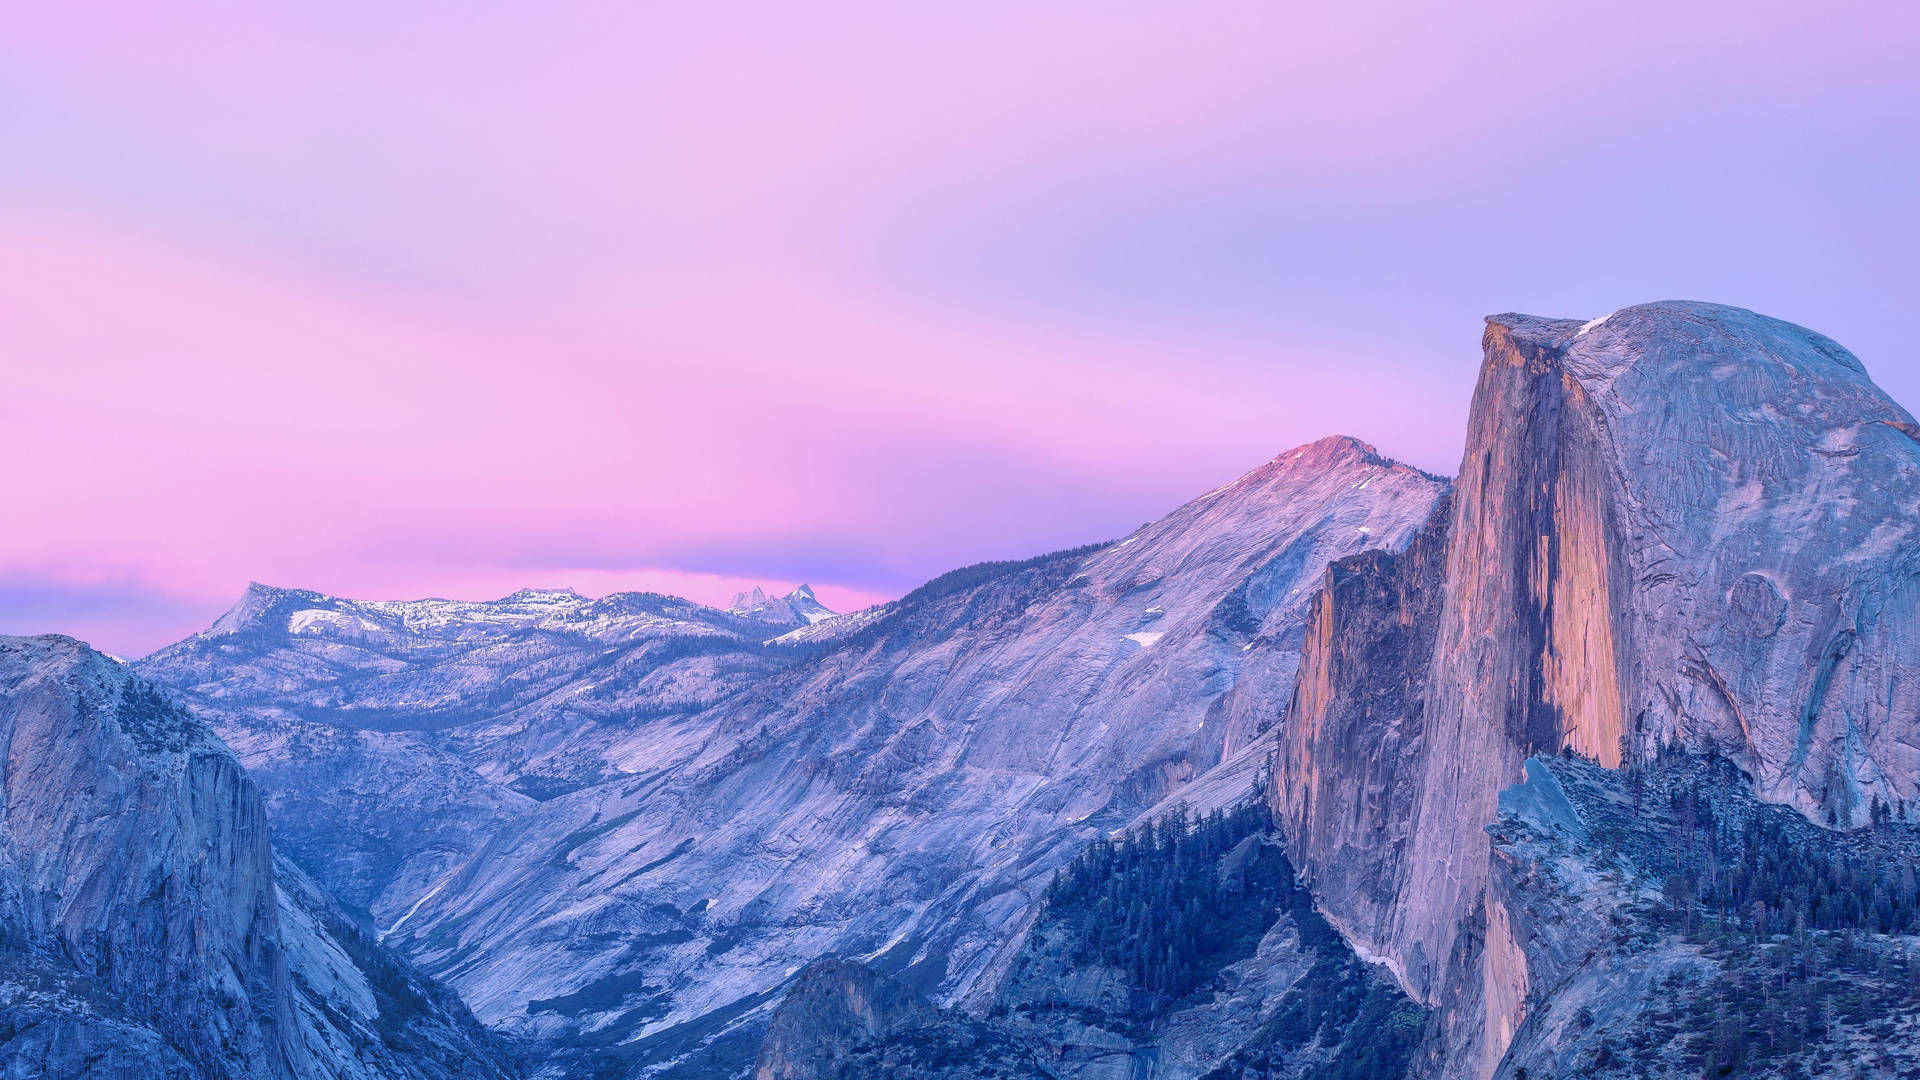 Yosemite 4832X2718 Wallpaper and Background Image